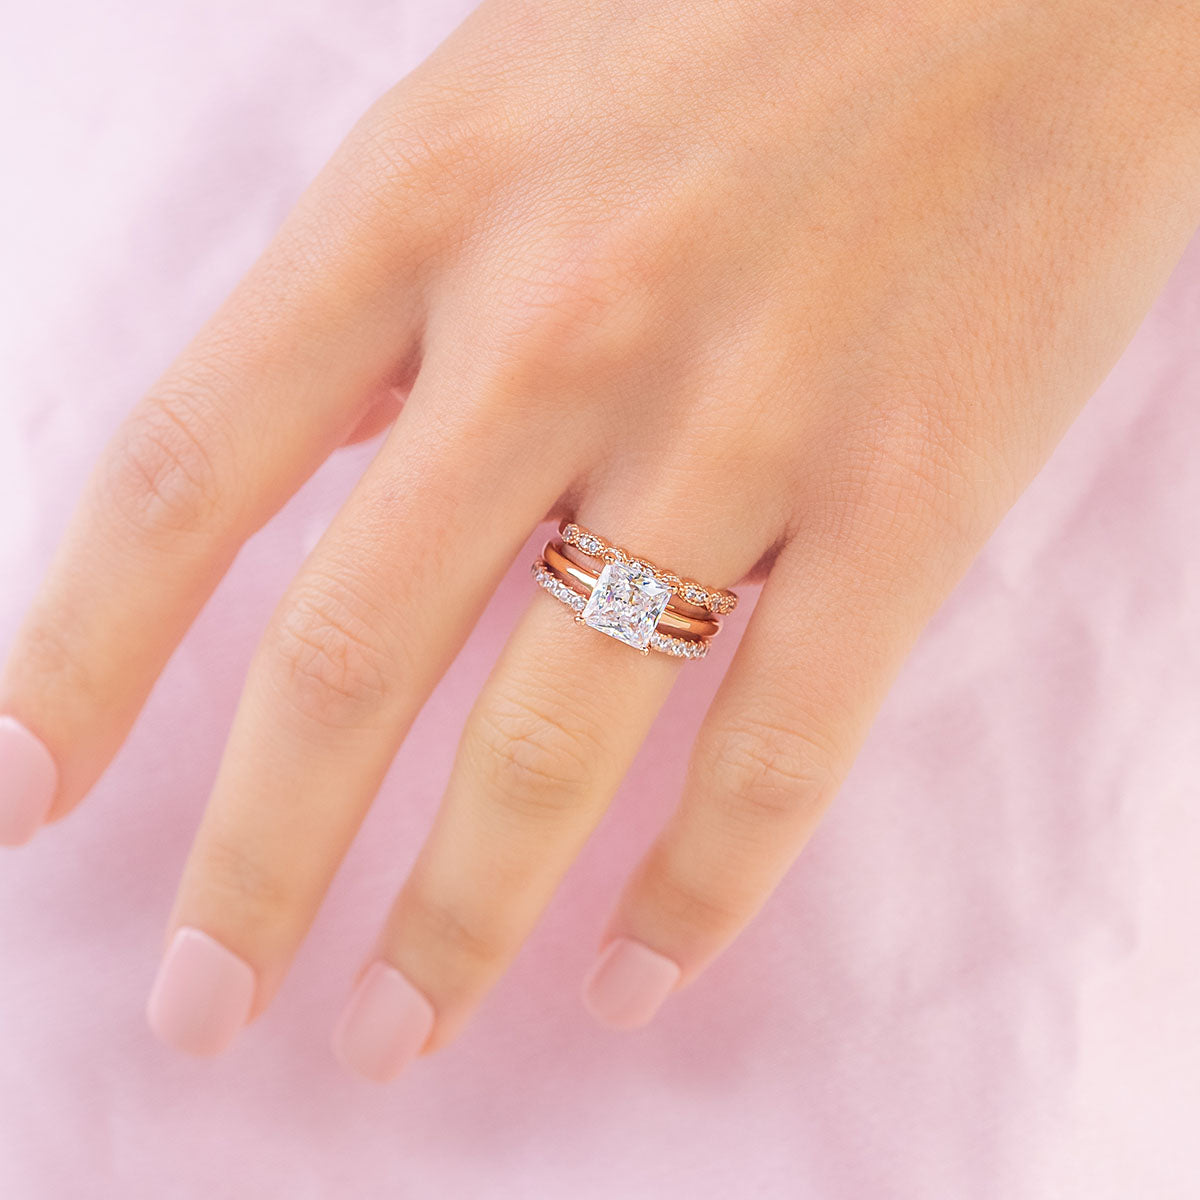 Rose gold princess cut engagement ring on model